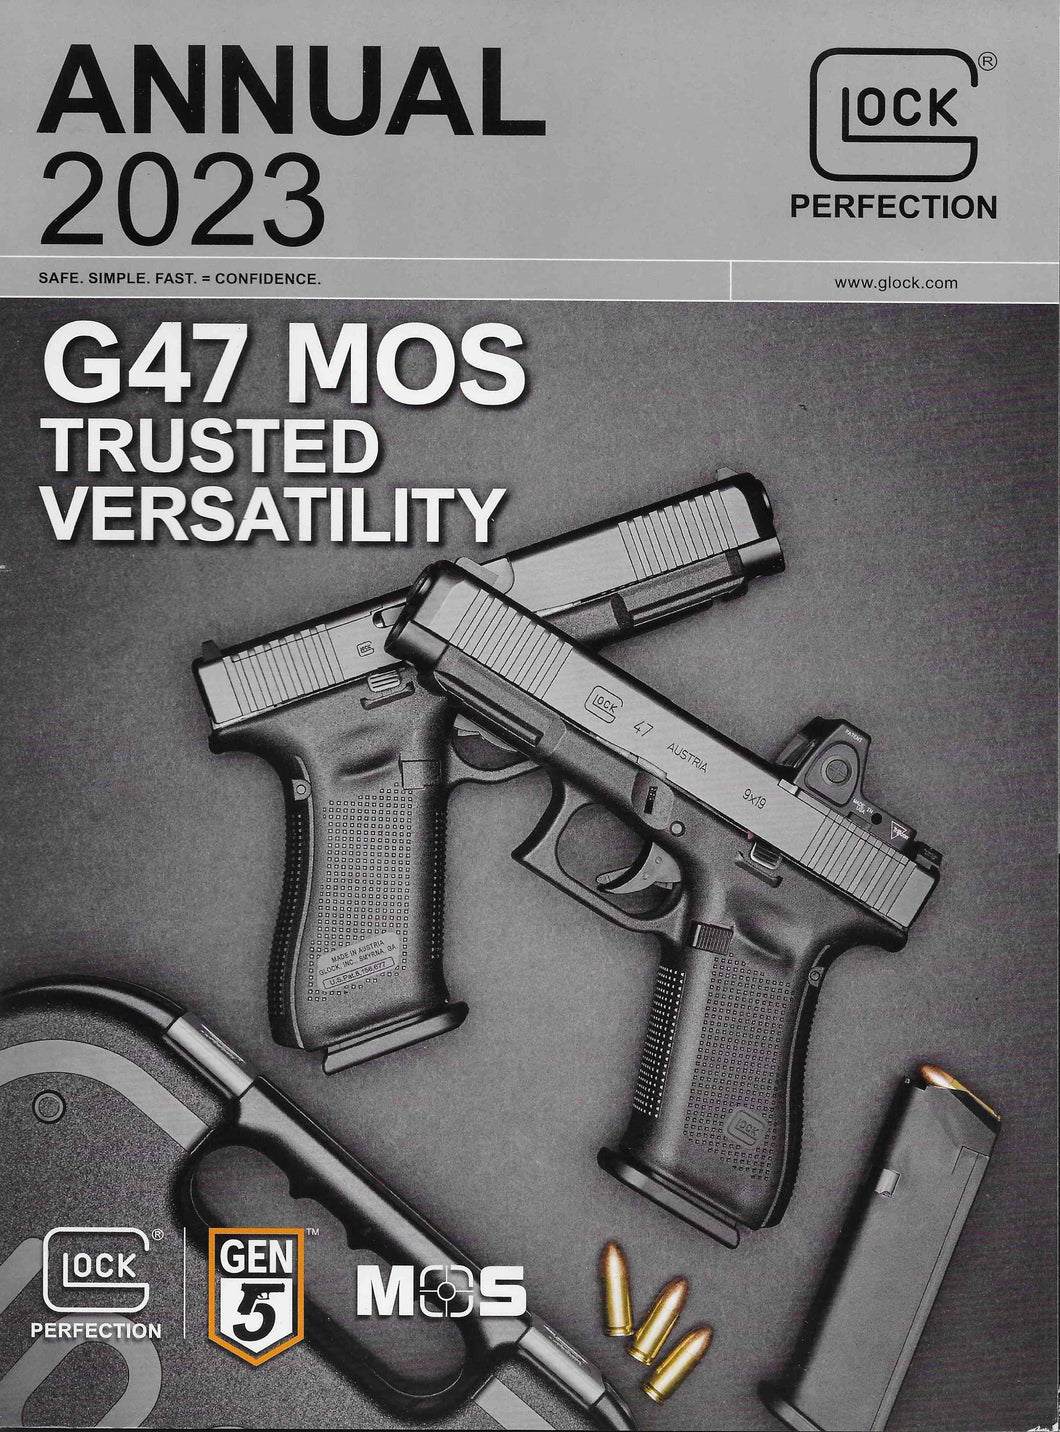 NEW 2023 GLOCK Annual magazine